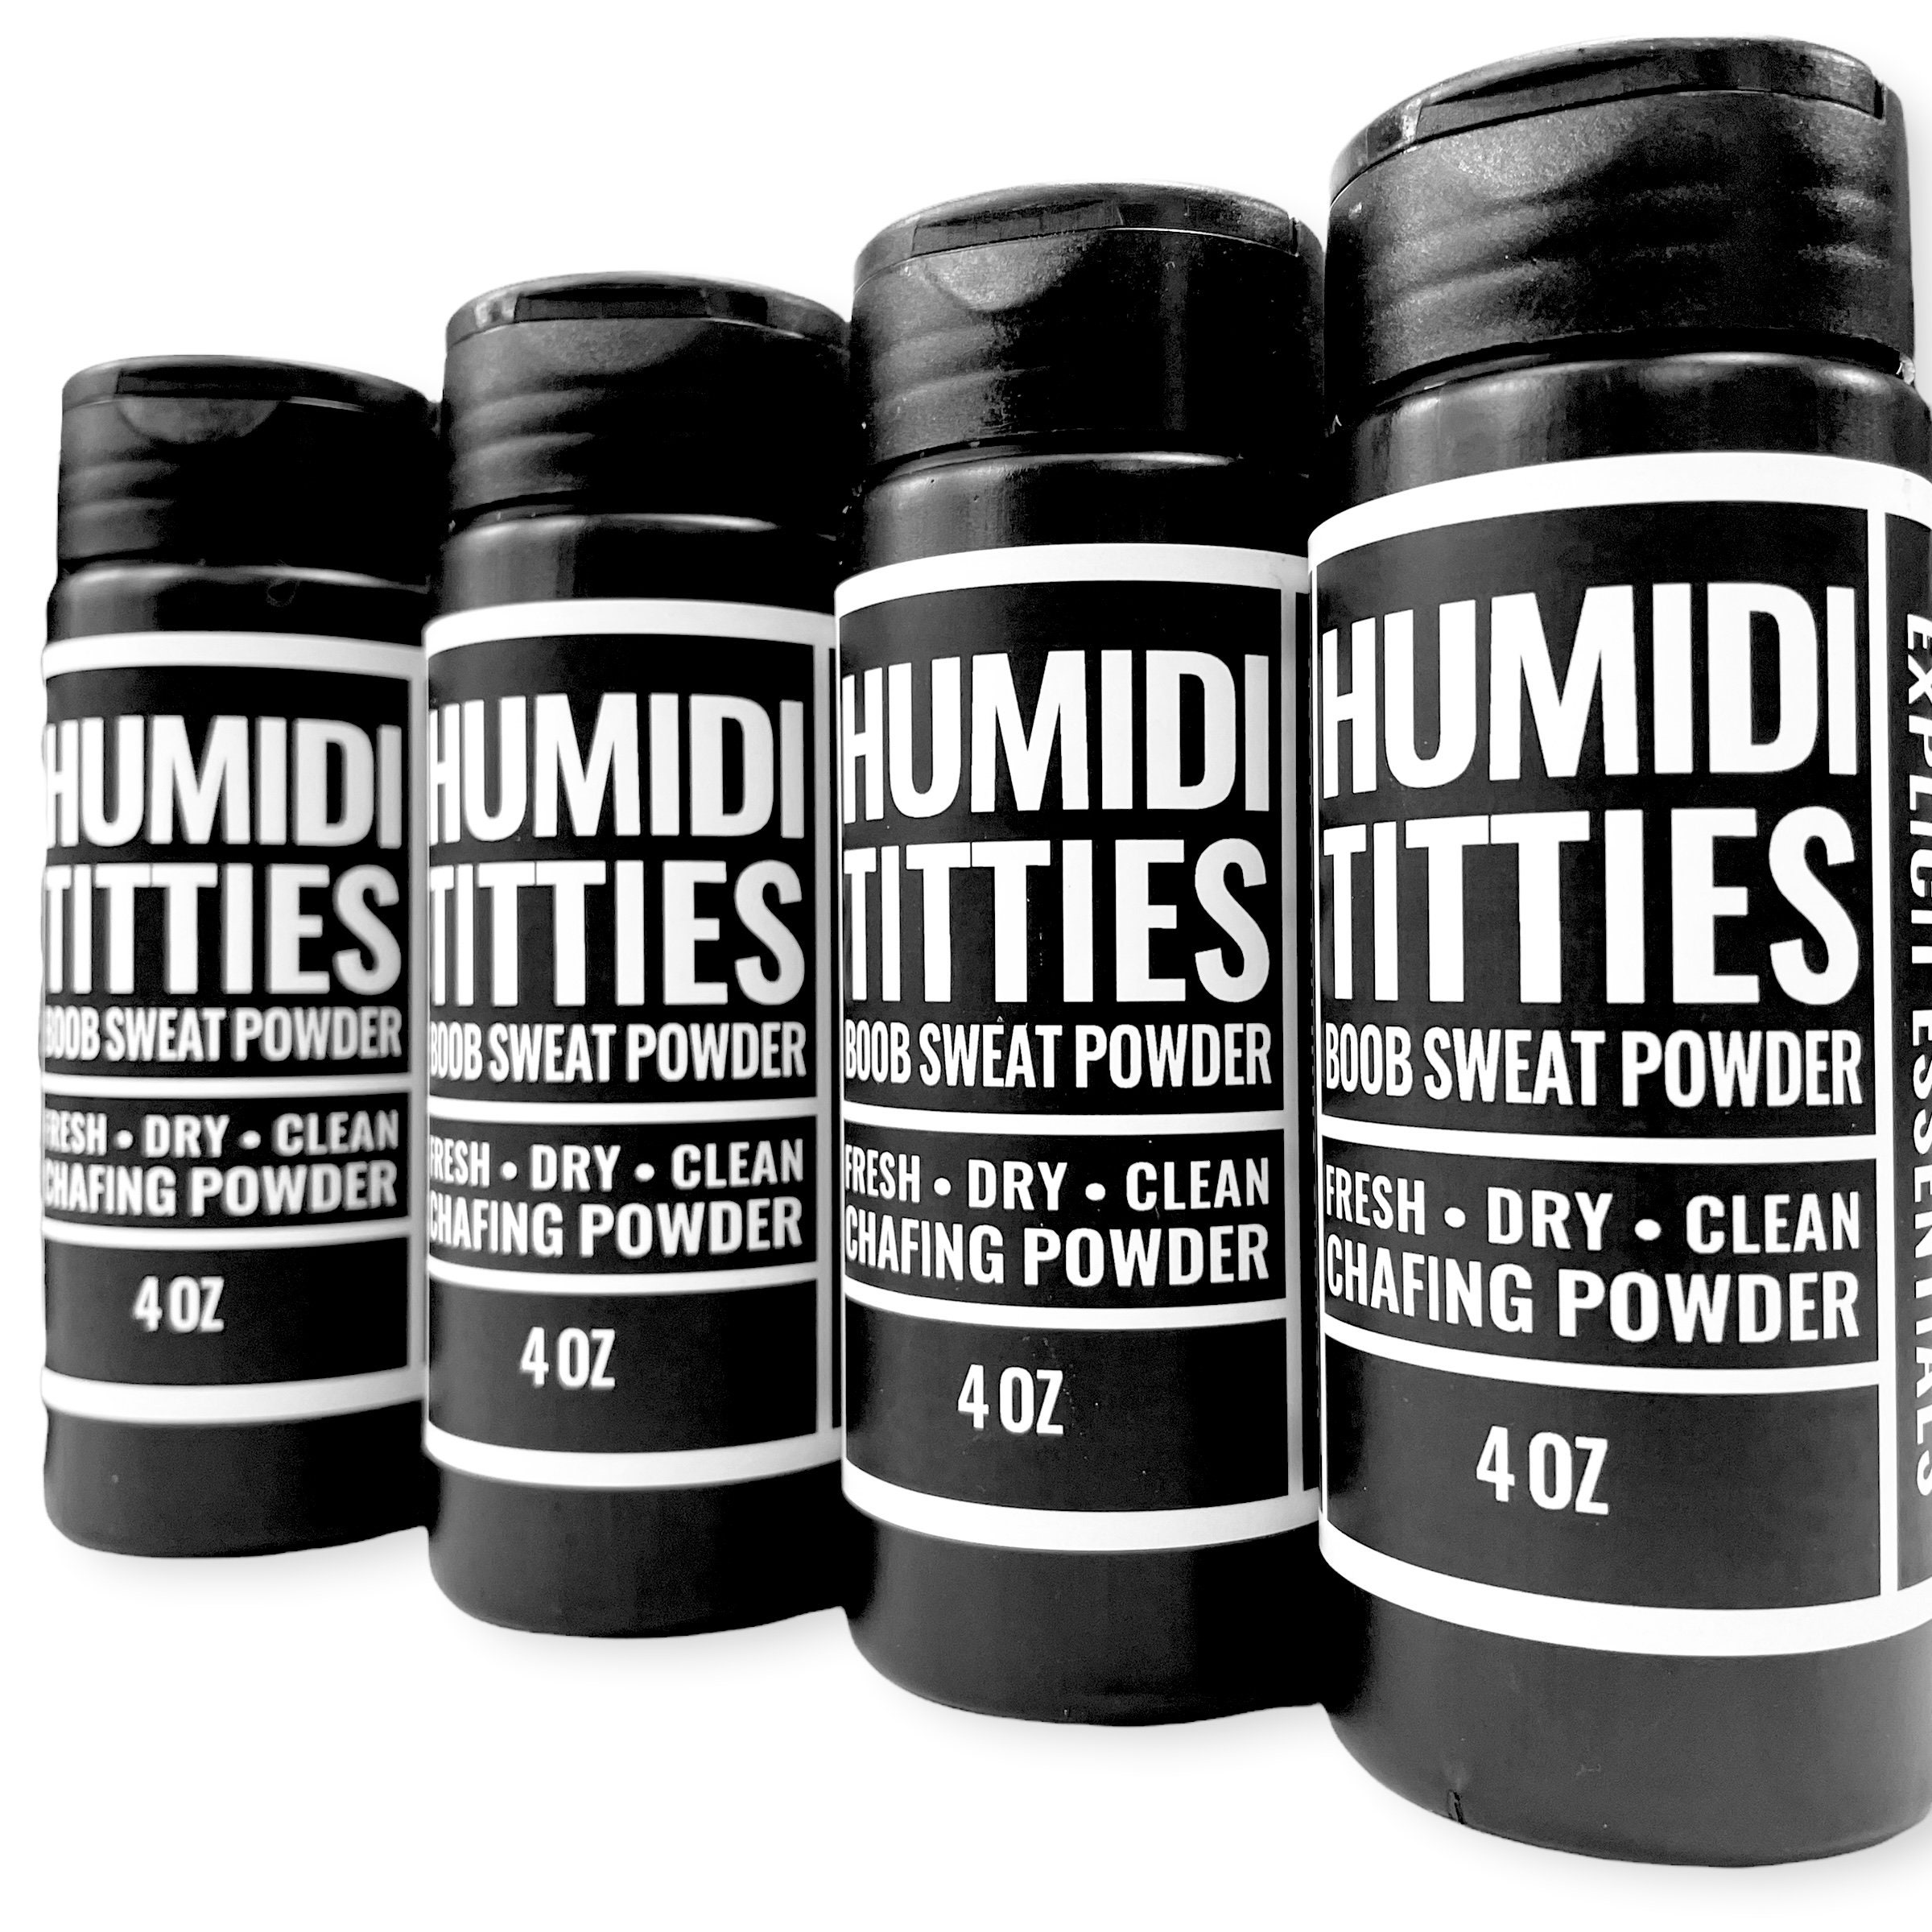 Humidititties, Boob Sweat Powder, Powder Deodorant, Underboob Sweat -   Canada